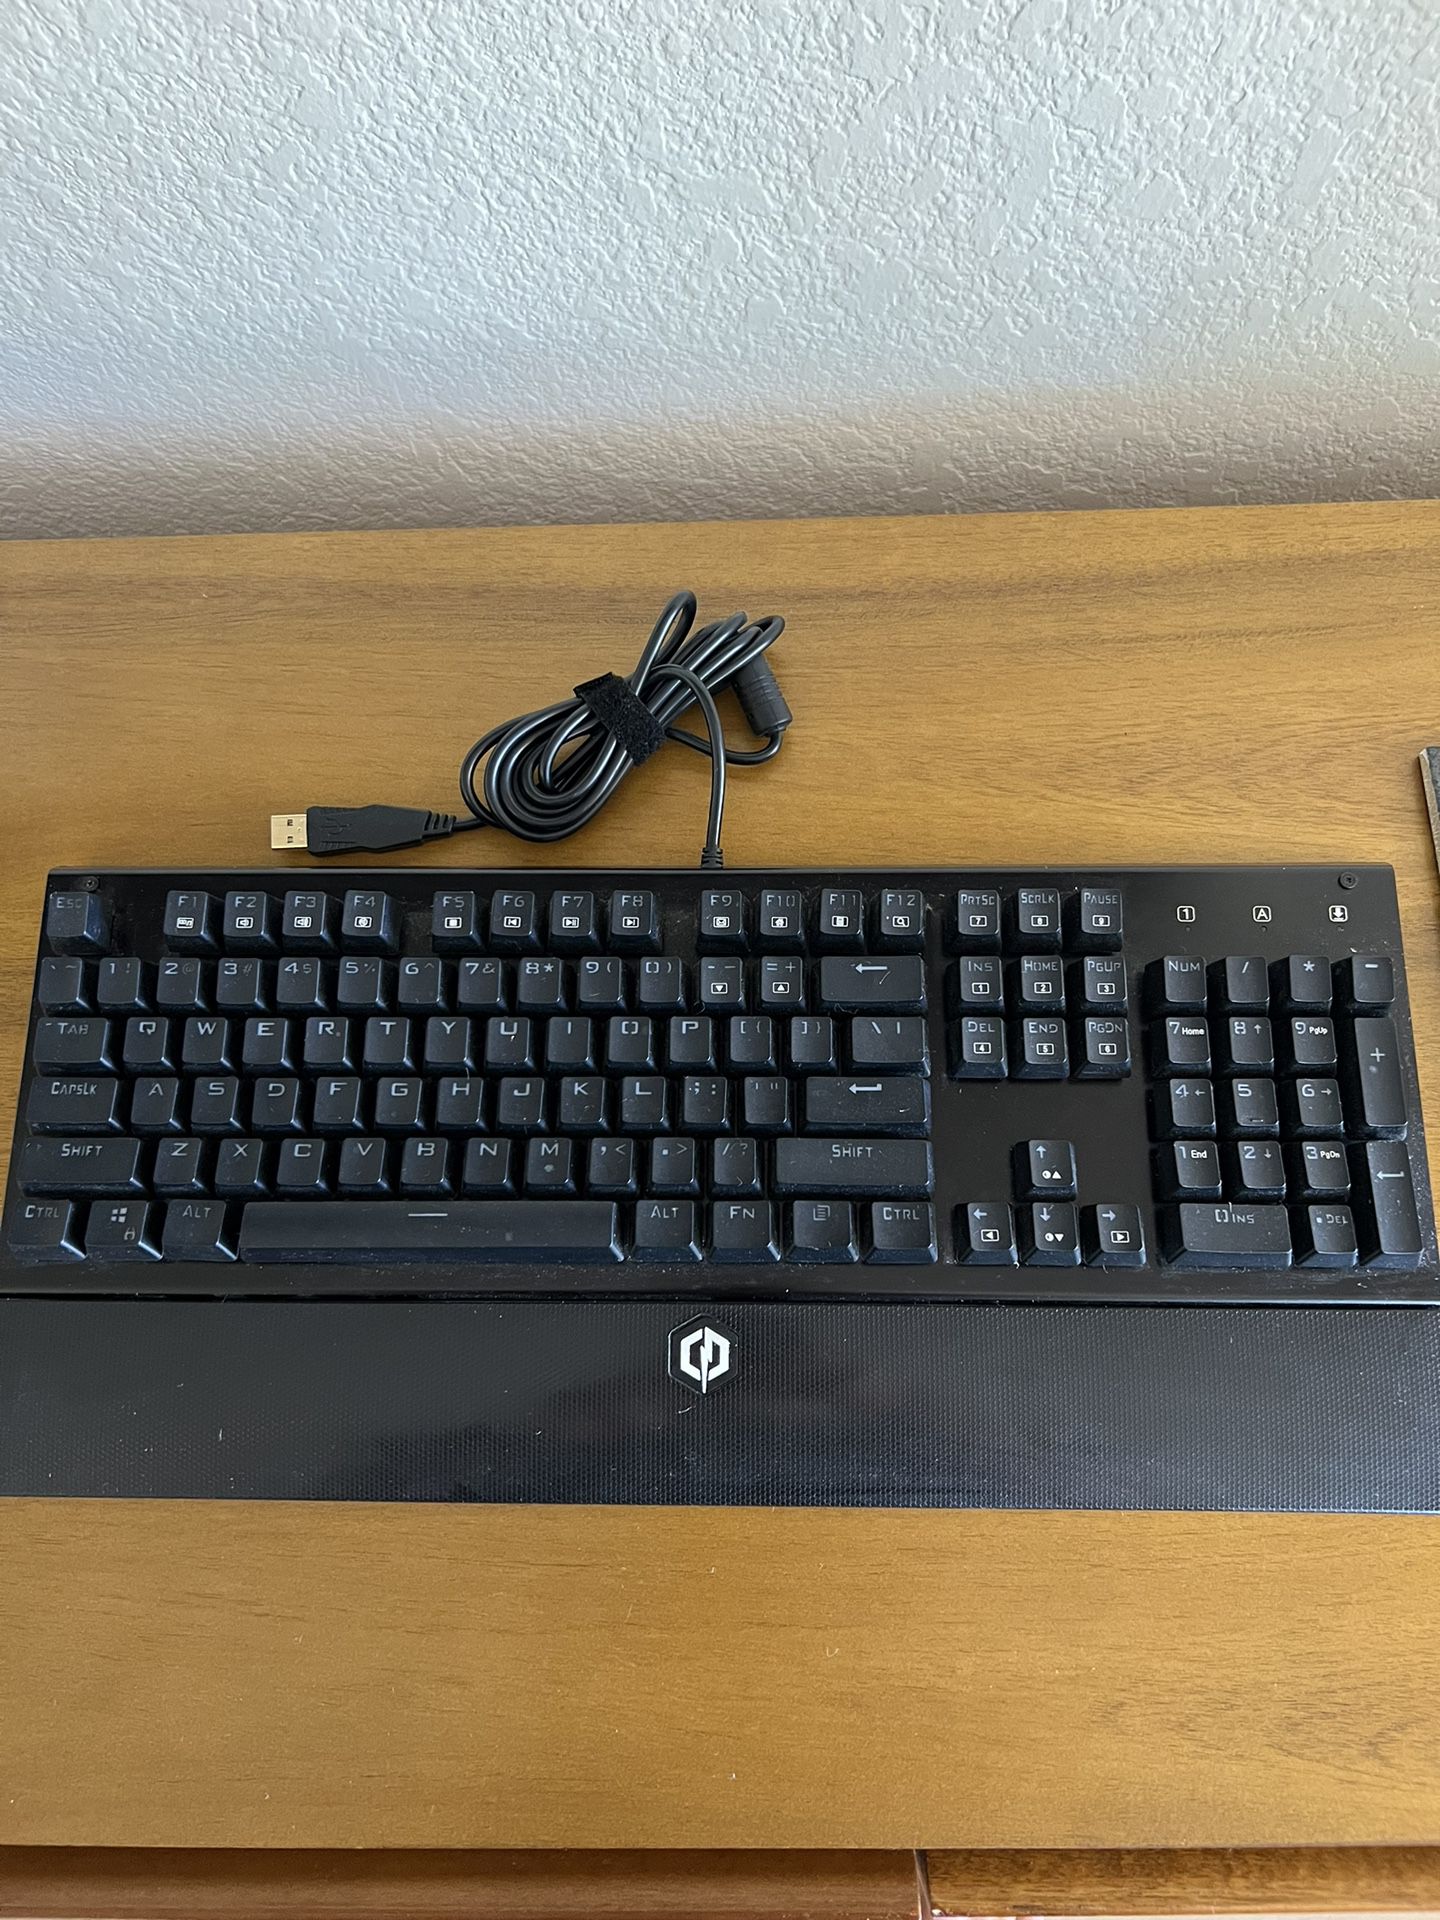 Skorpion K2 Mechanical RGB Keyboard